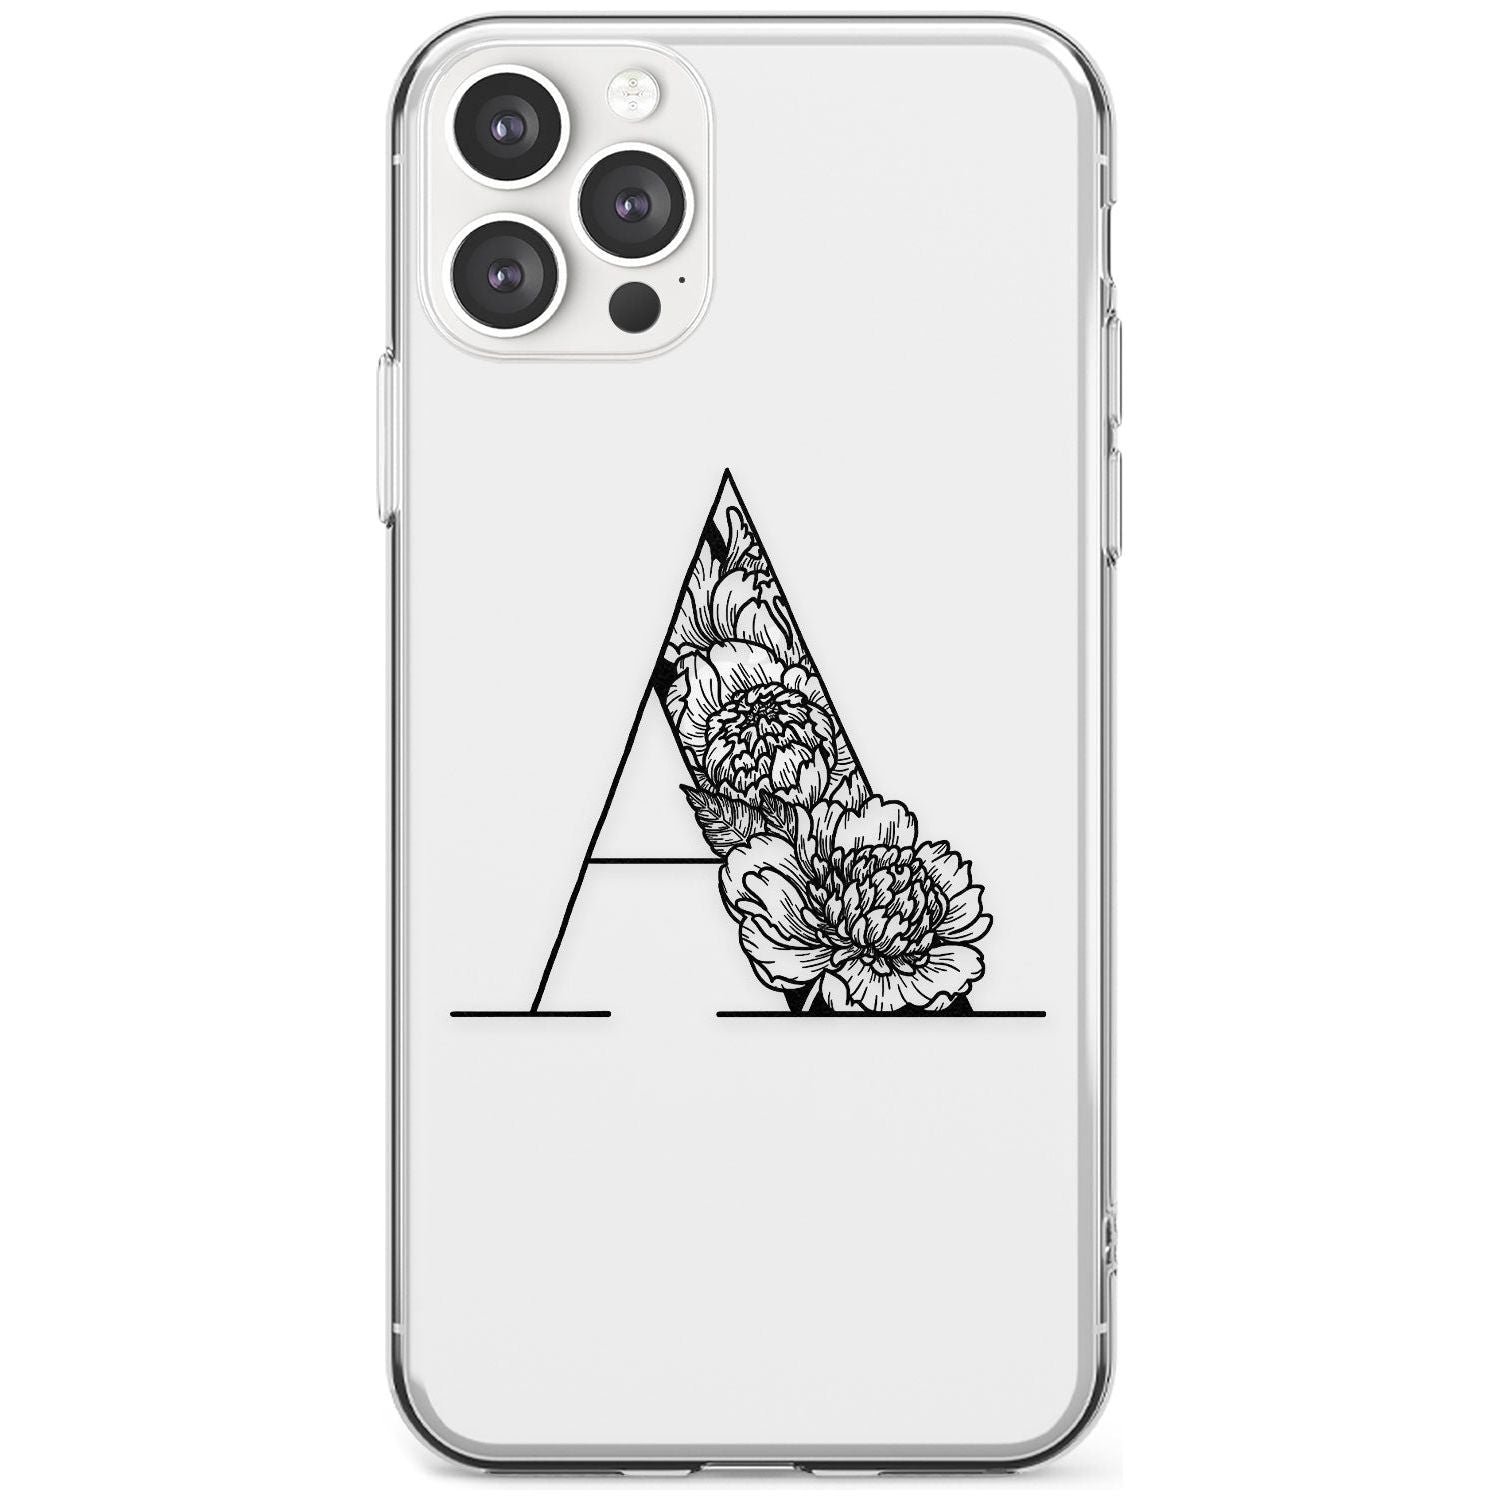 Floral Monogram Letter Black Impact Phone Case for iPhone 11 Pro Max